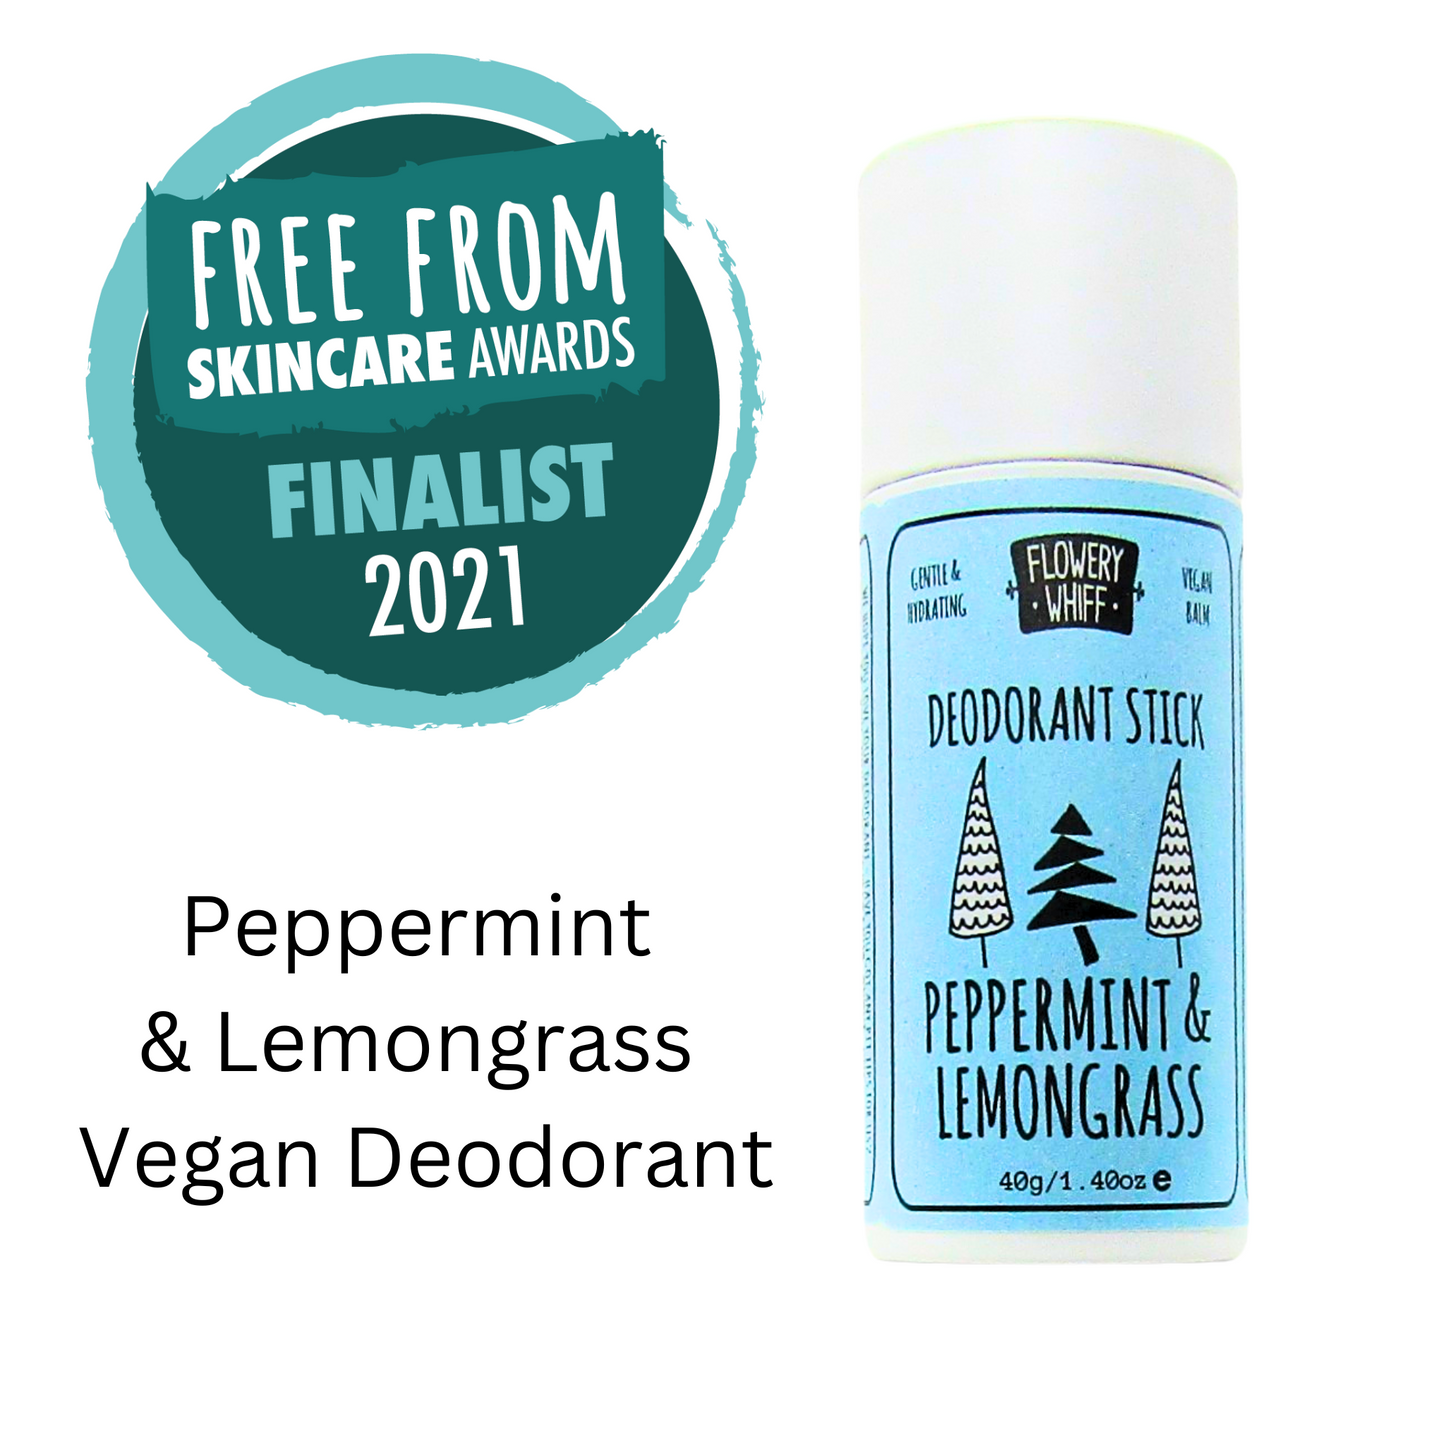 Peppermint & Lemongrass Vegan Deodorant Stick